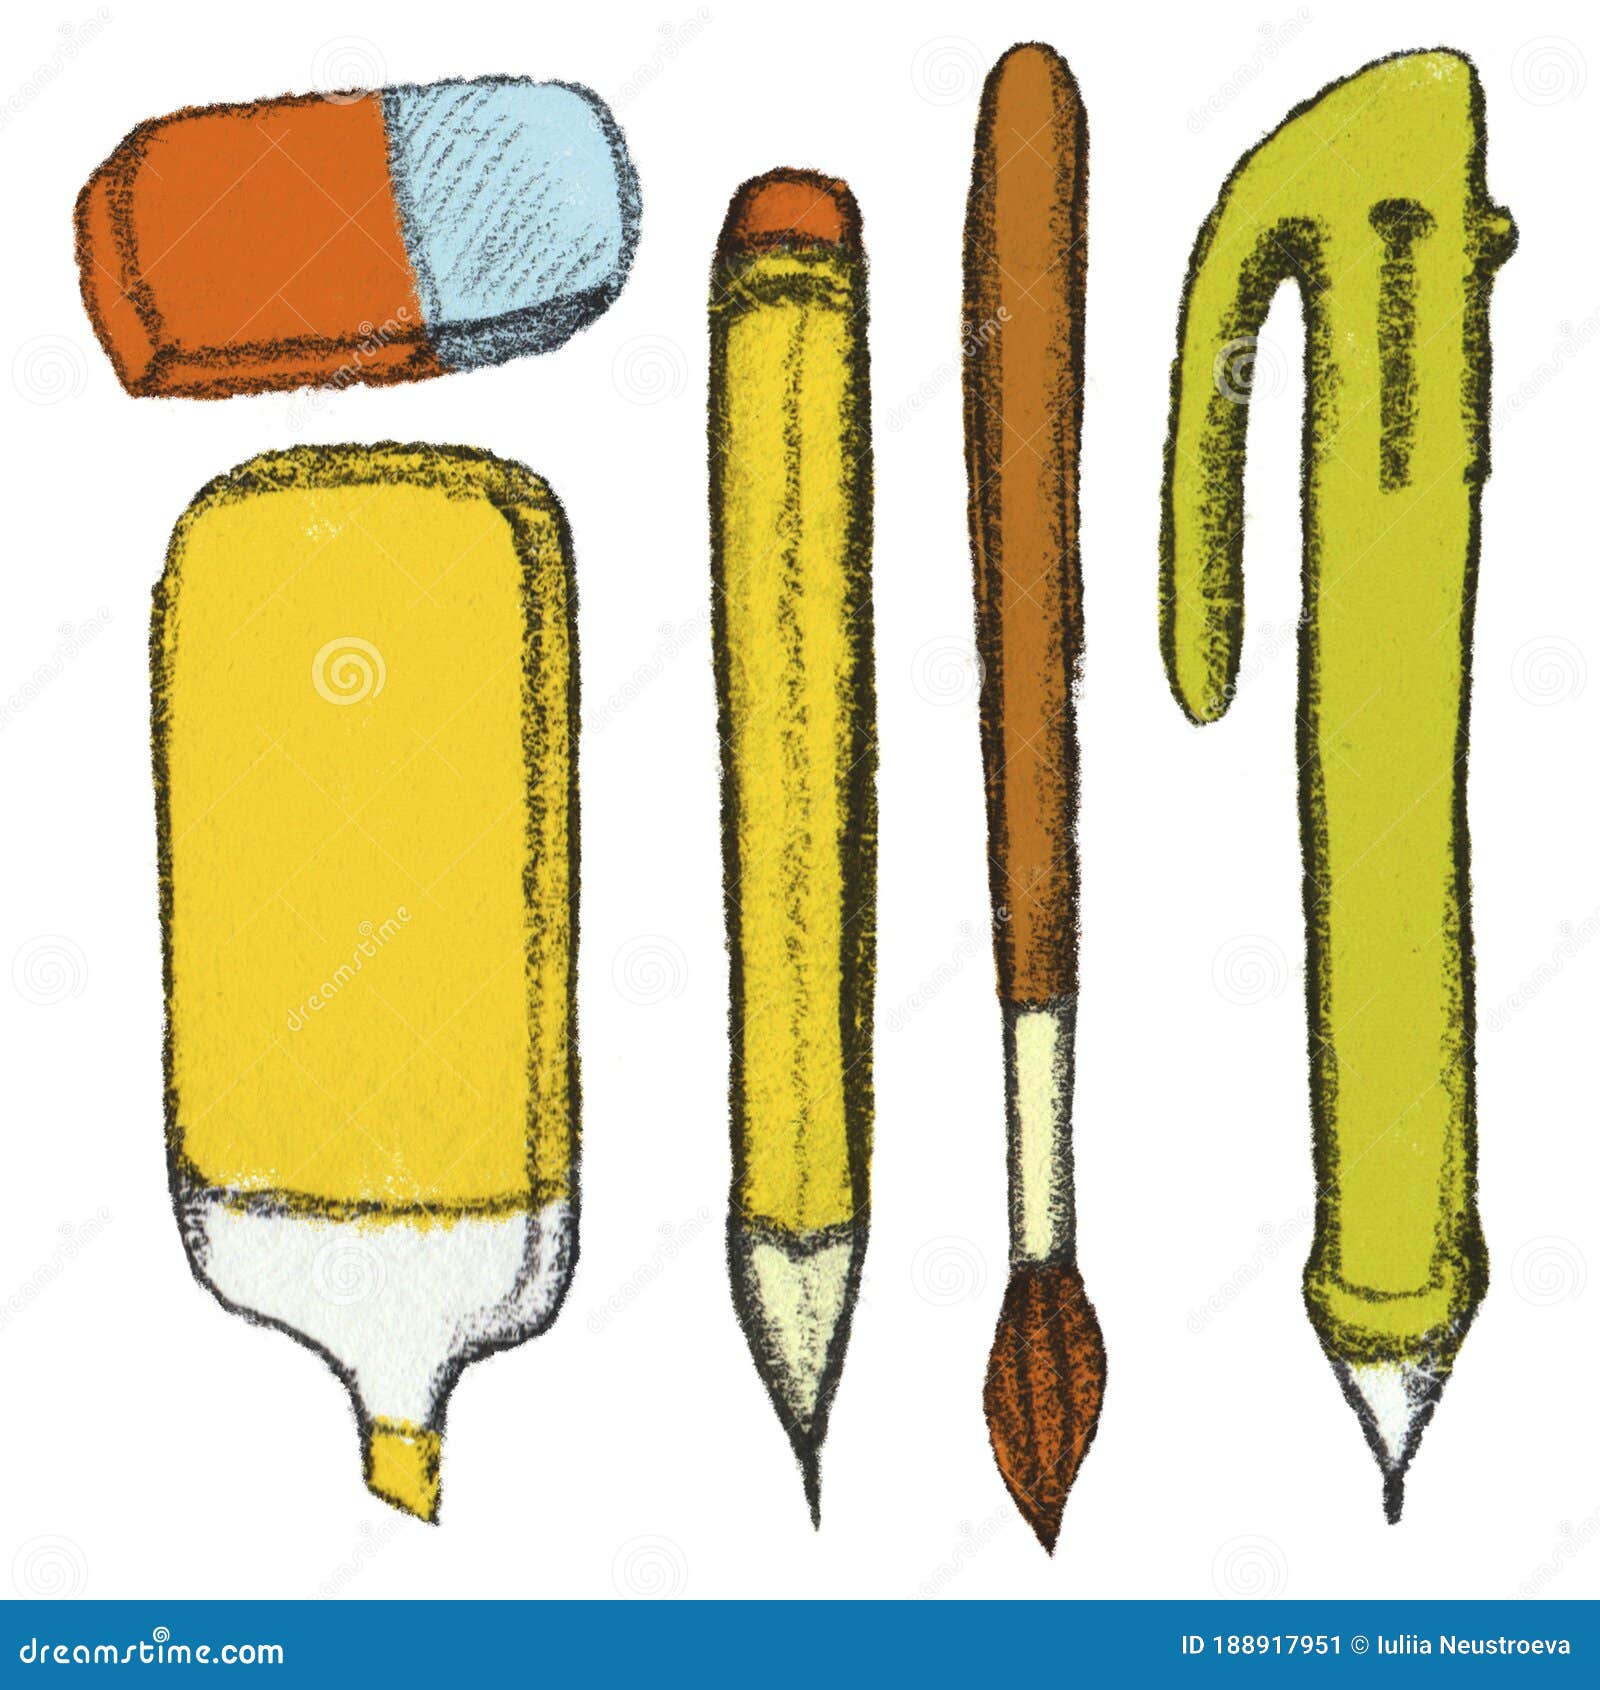 https://thumbs.dreamstime.com/z/clip-art-pencil-sketch-school-stationery-supplies-clip-art-pencil-sketch-school-stationery-supplies-high-quality-188917951.jpg